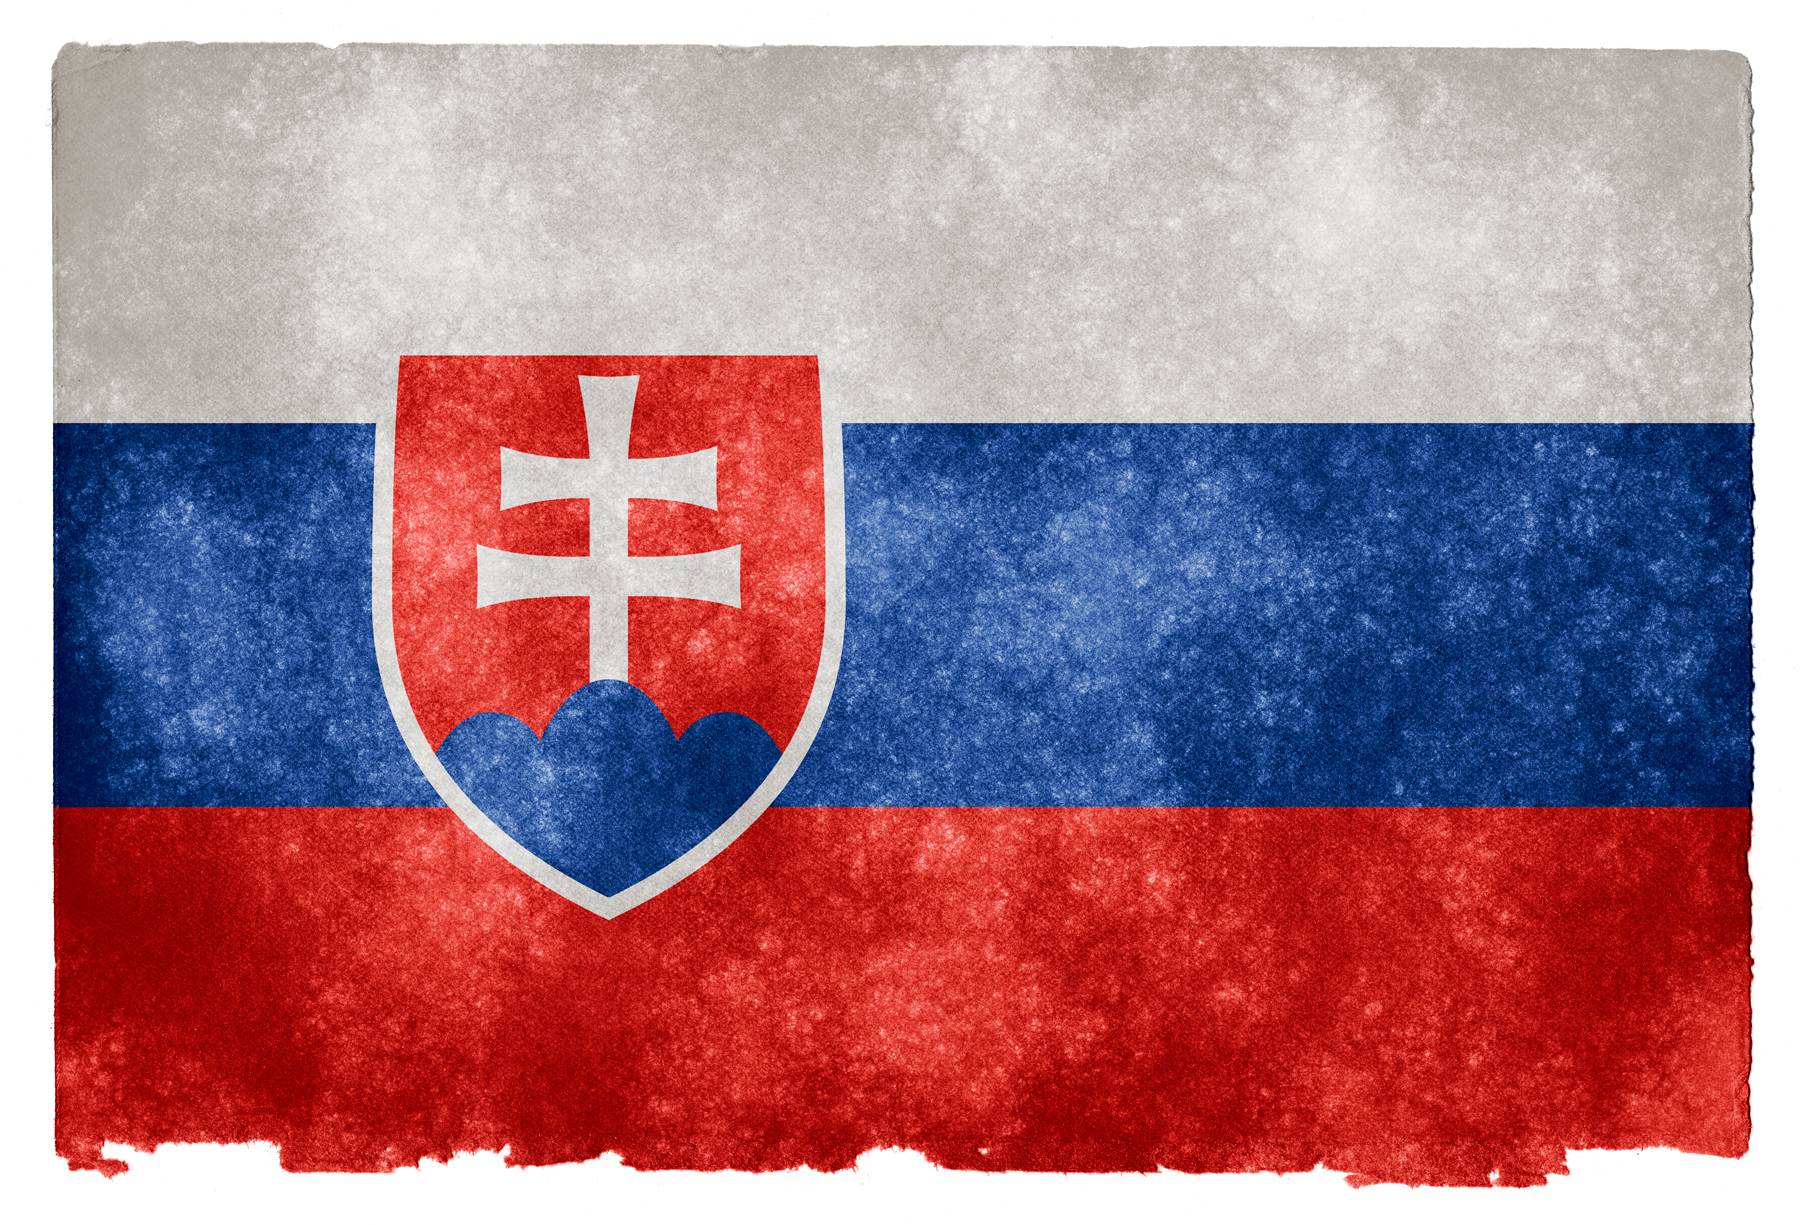 Slovakia Wallpaper